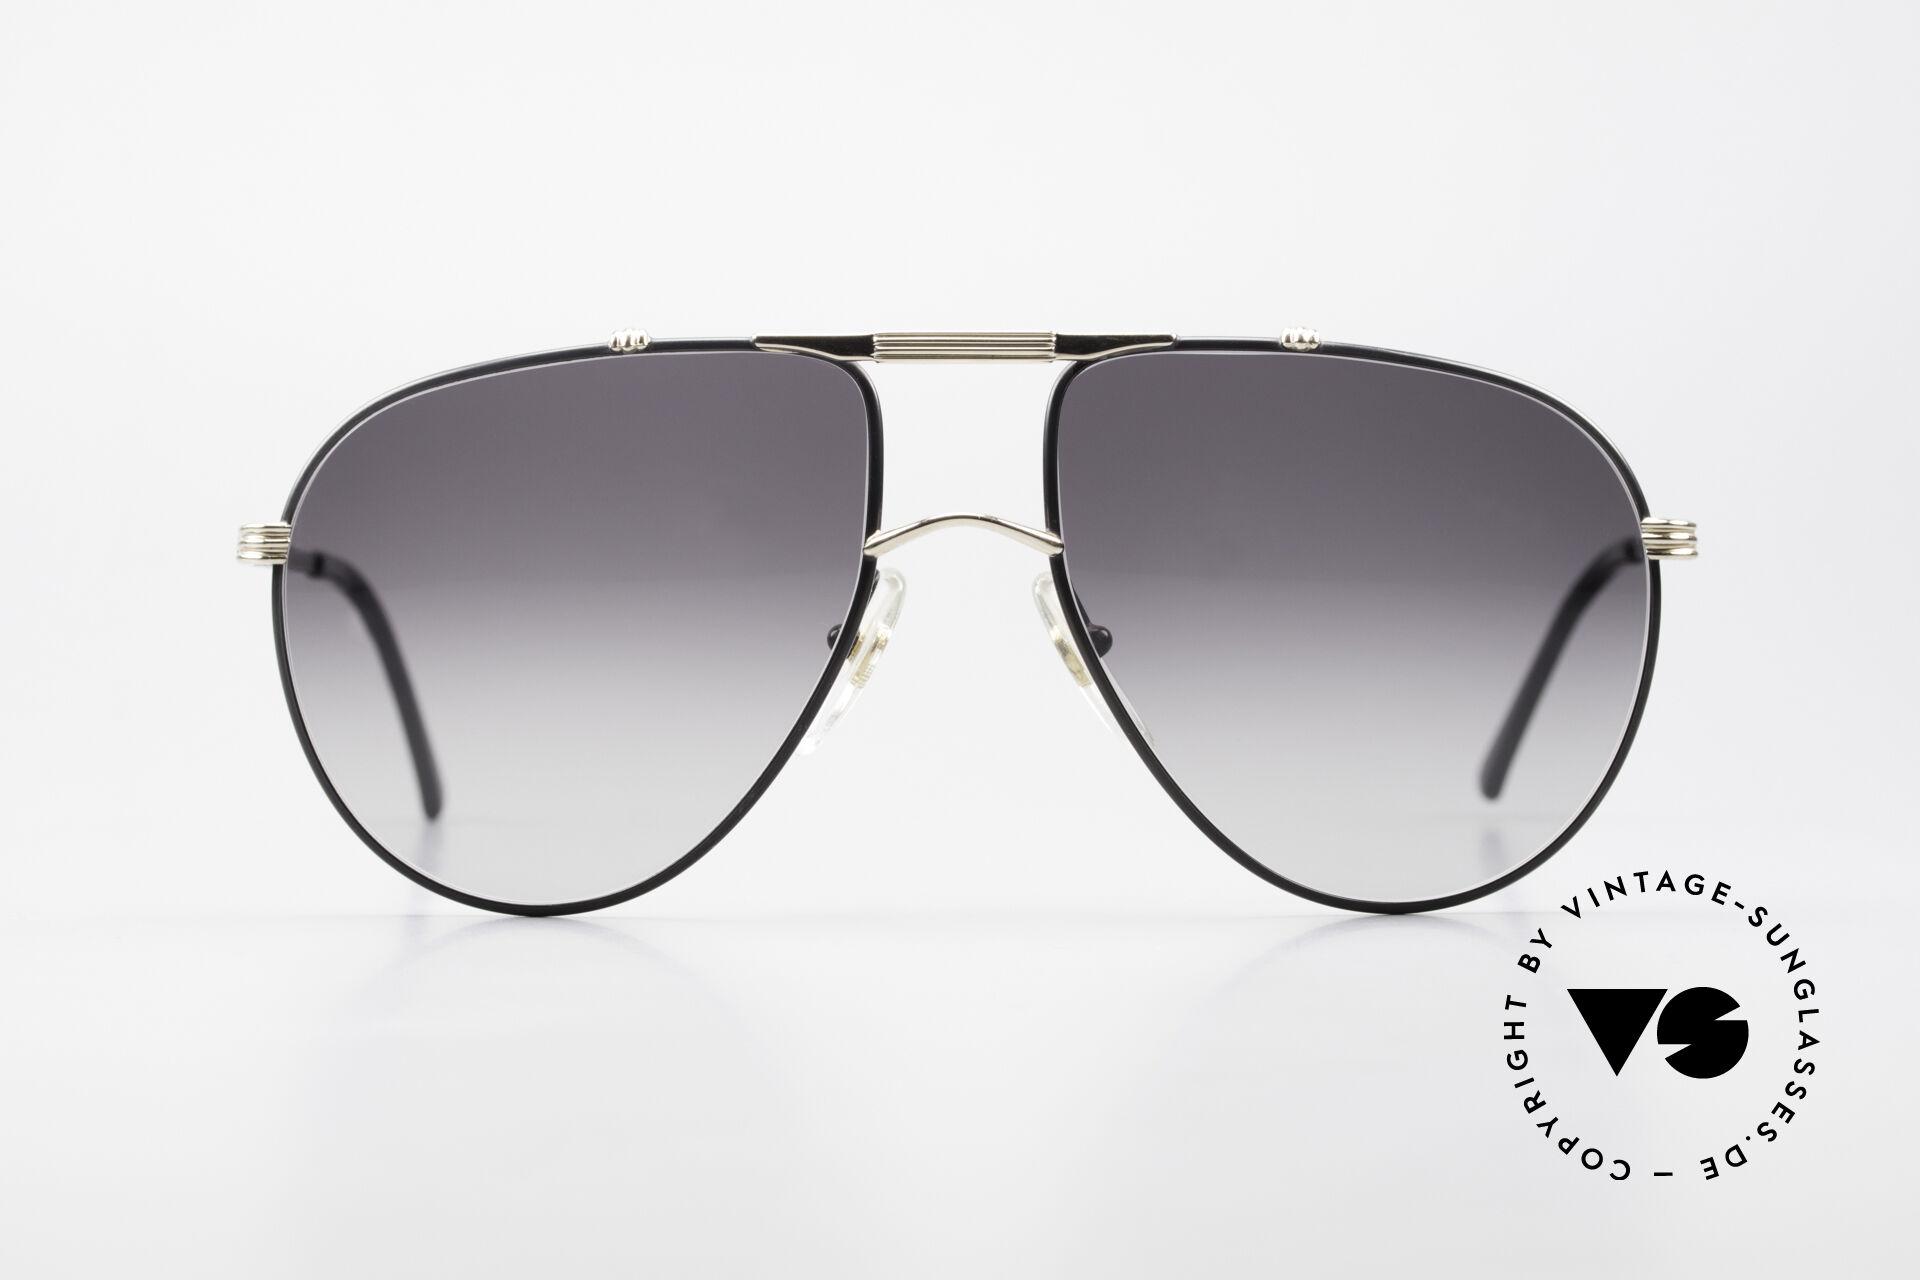 Sunglasses Christian Dior 2248 80's Aviator Large Sunglasses